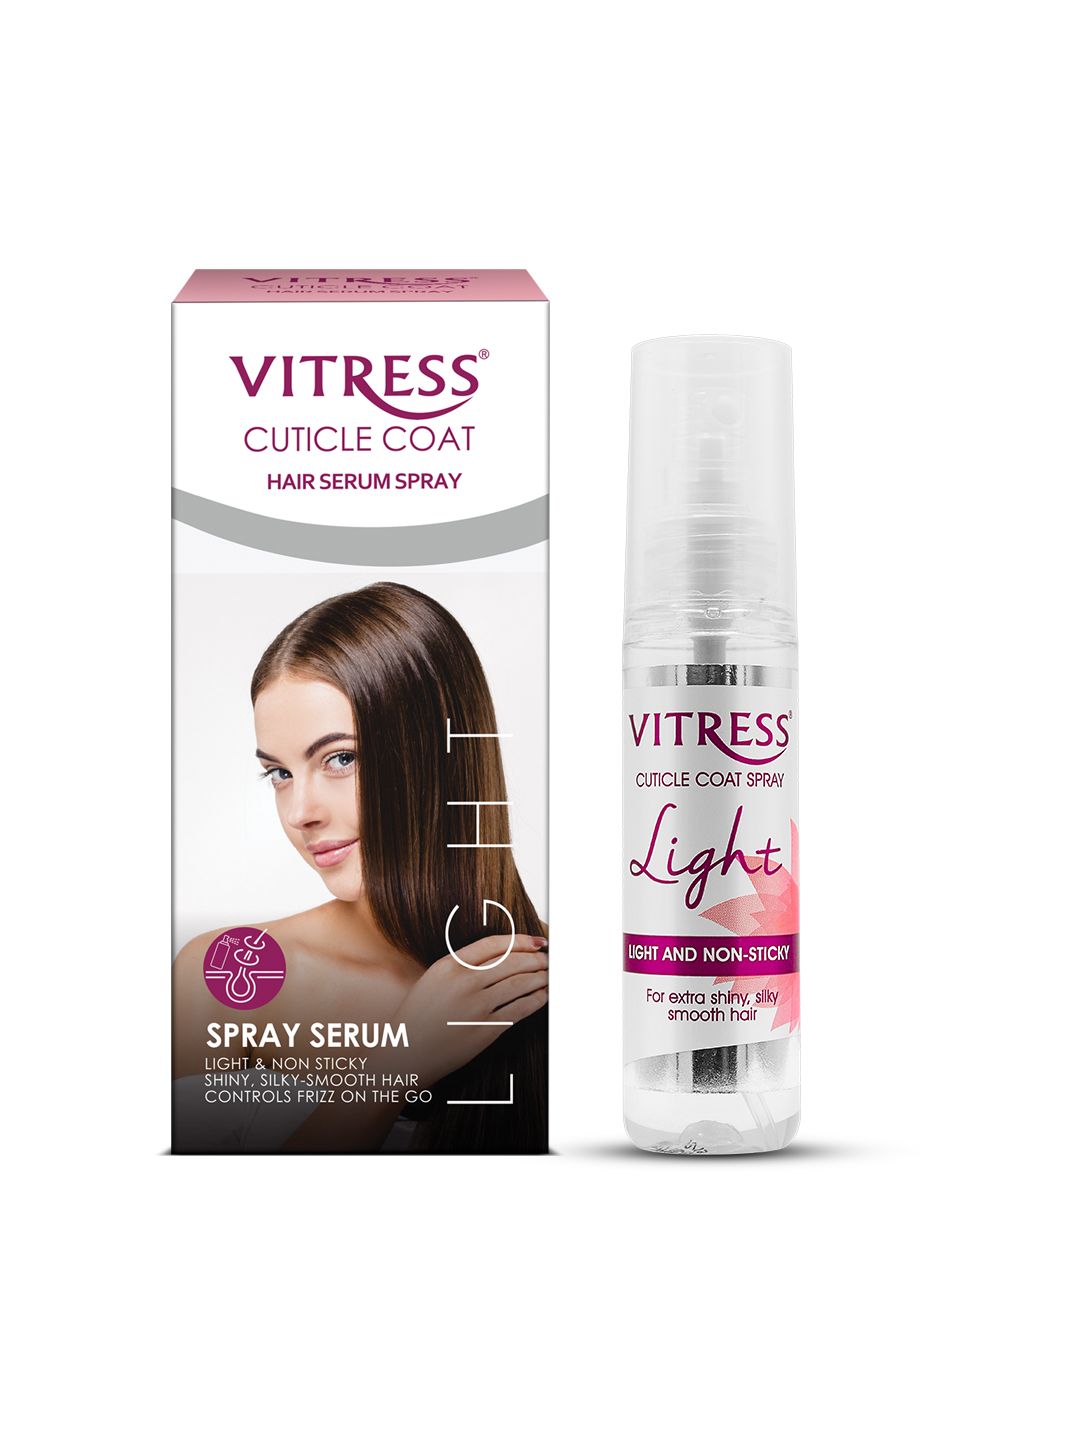 Vitress Cuticle Coat Light Hair Serum Spray - 50 ml Price in India